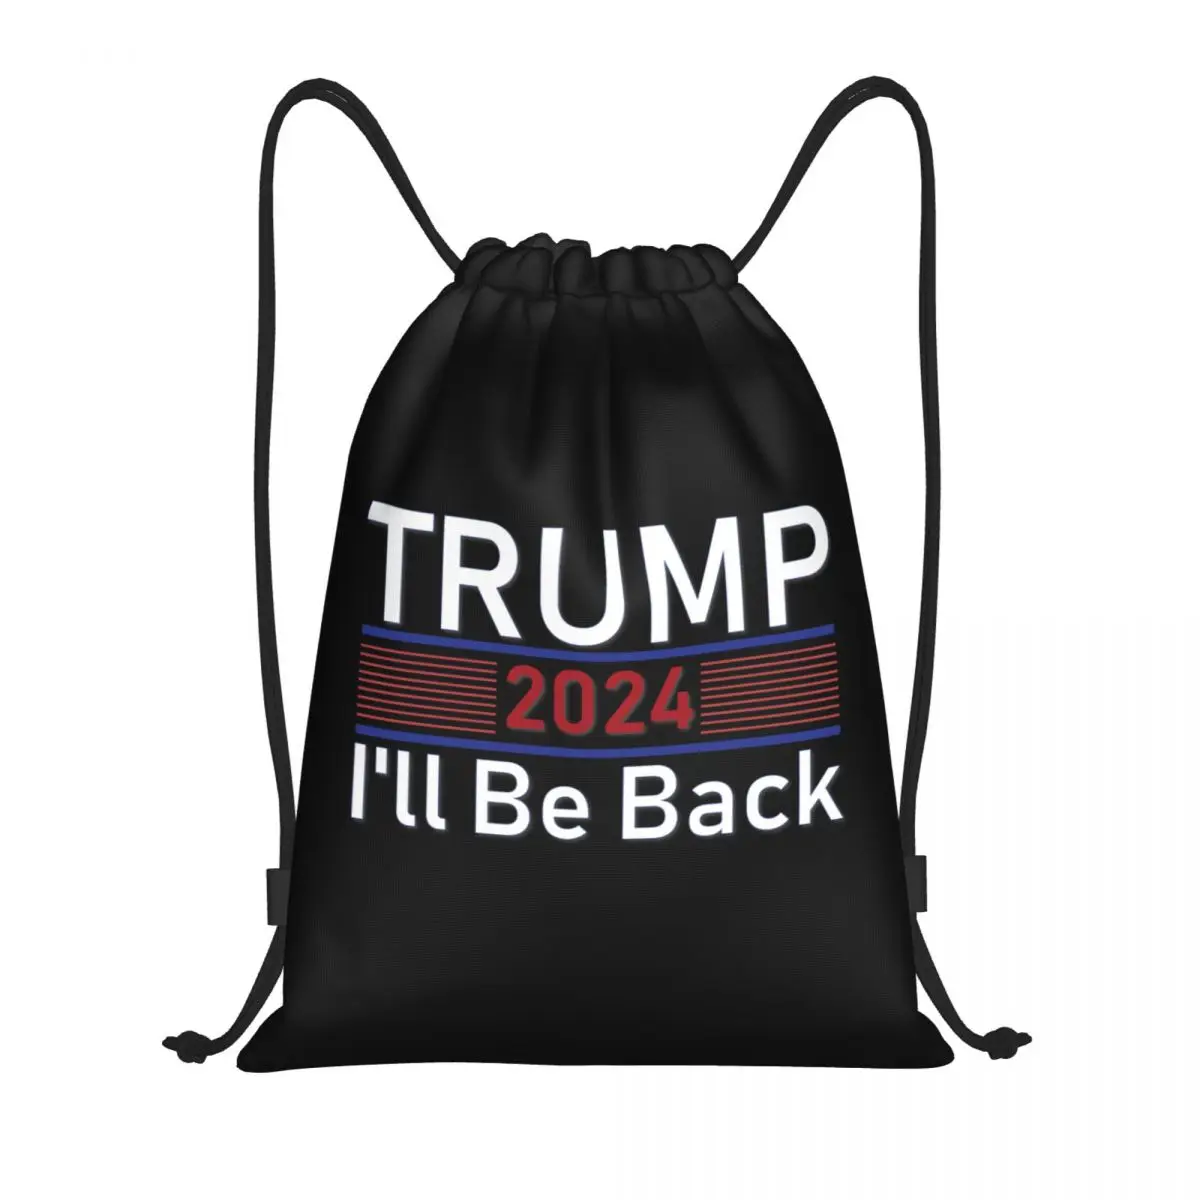 

Trump 2024 I'll Be Back Drawstring Backpack Women Men Gym Sport Sackpack Foldable Training Bag Sack